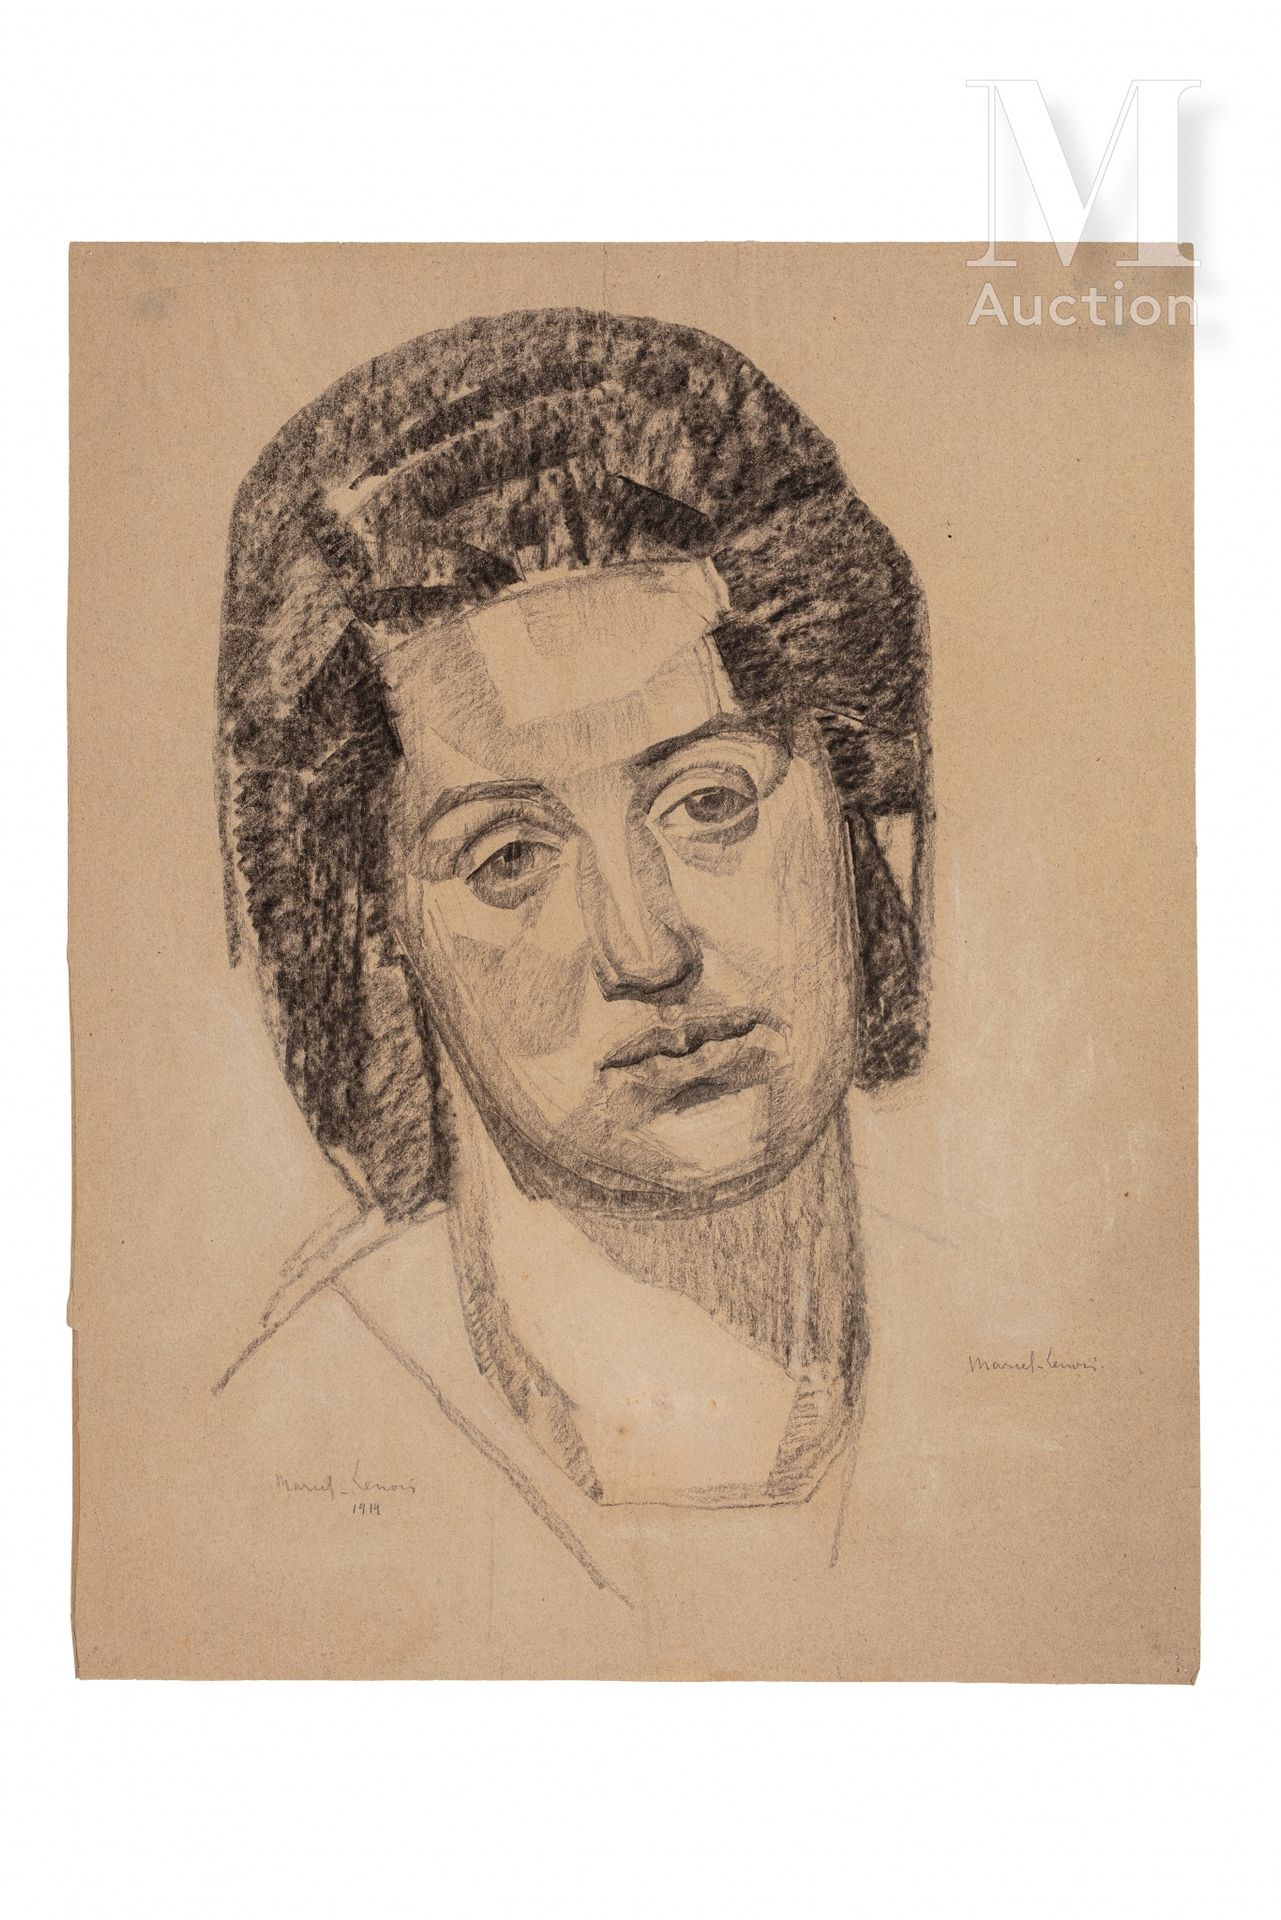 Jules Oury dit Marcel-Lenoir (Montauban 1872 - Montricoux 1931) 一个女人的画像

纸上木炭、粉笔&hellip;